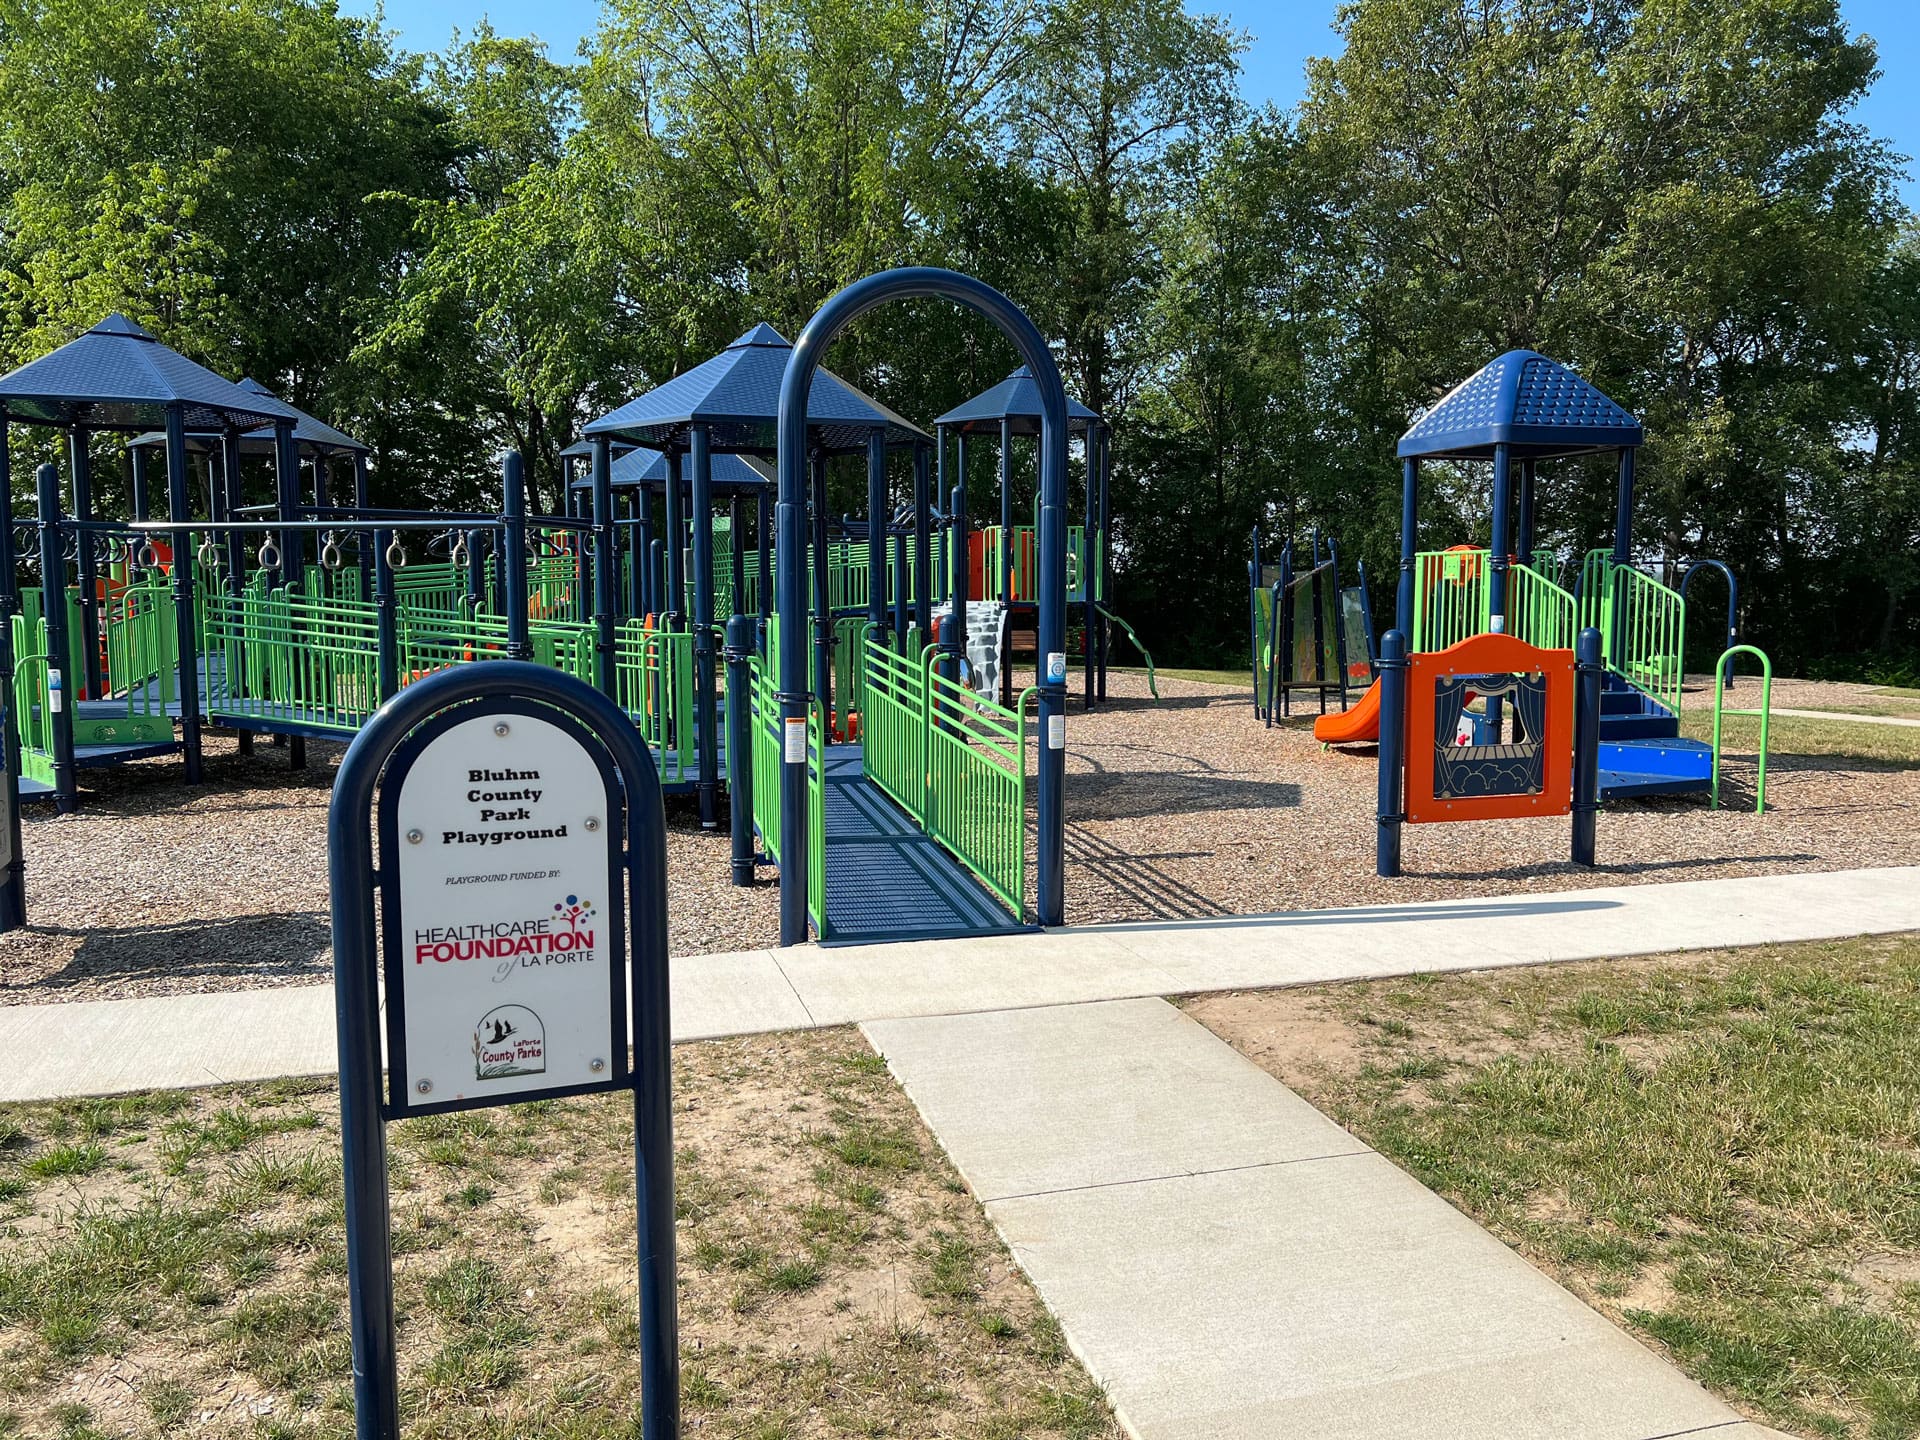 playground in park